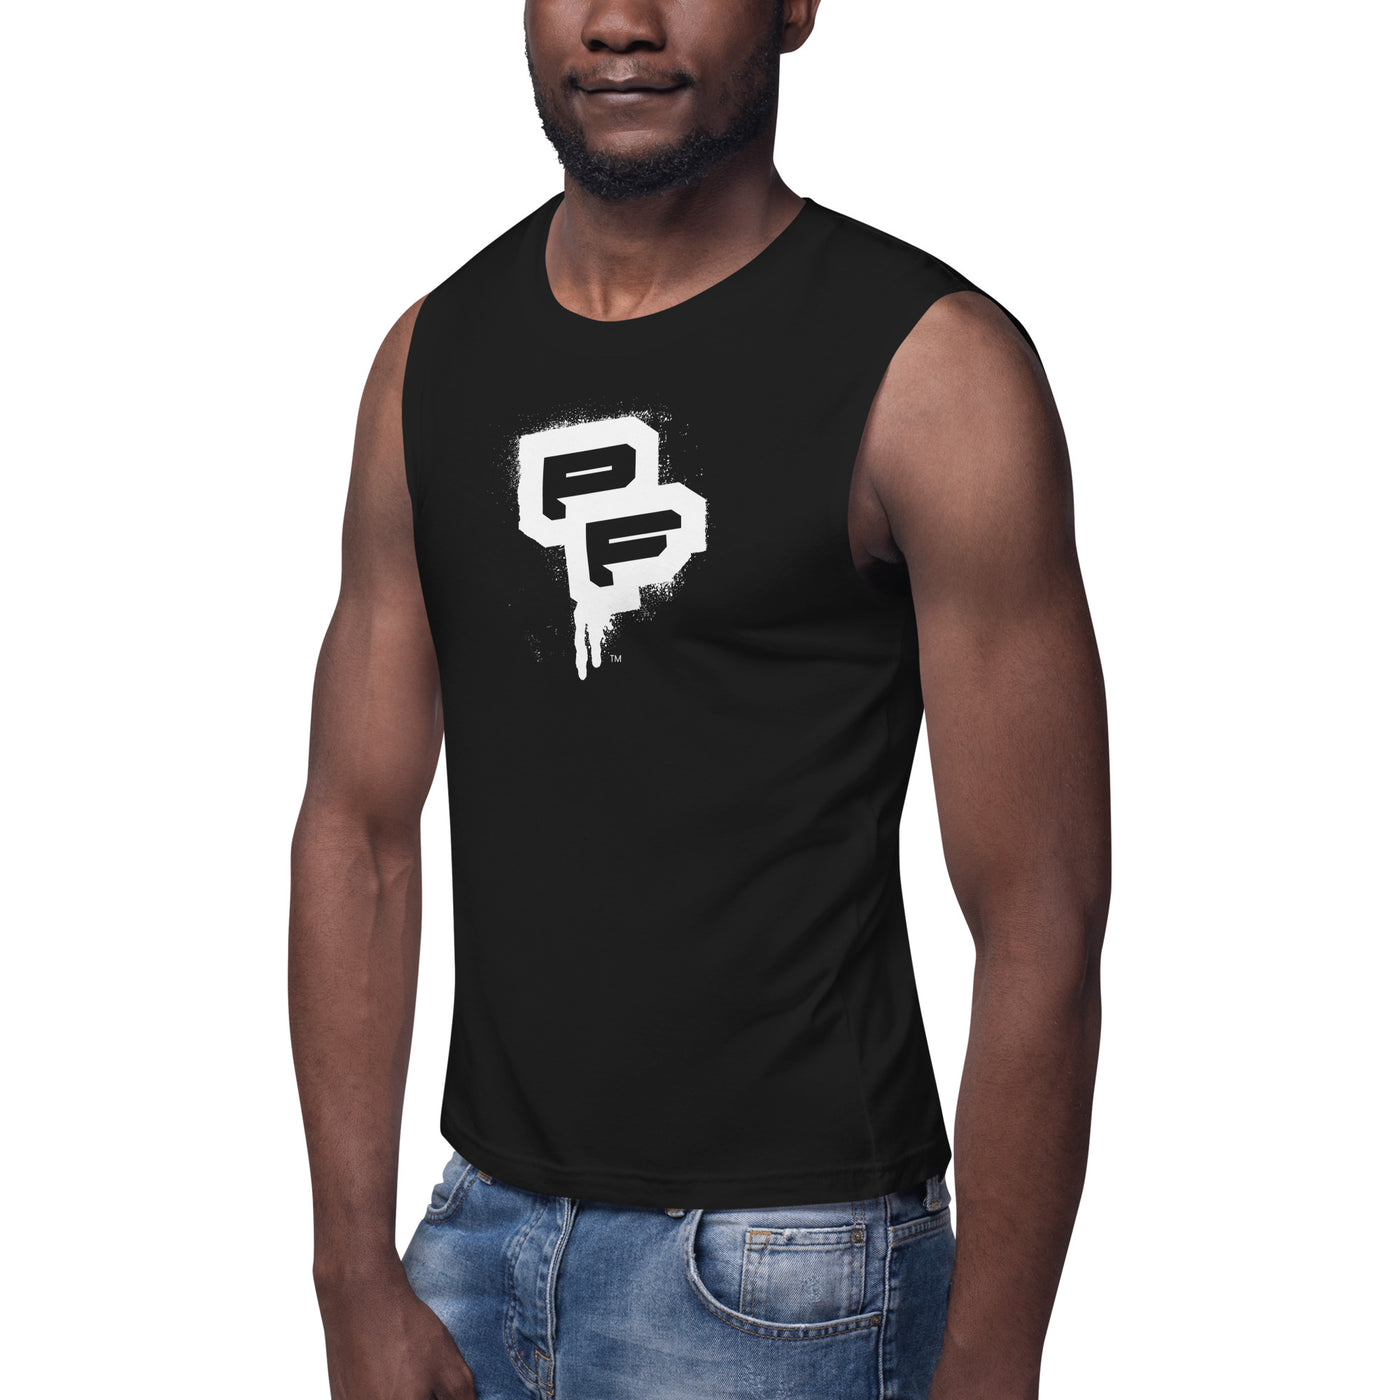 PF Black Muscle Shirt